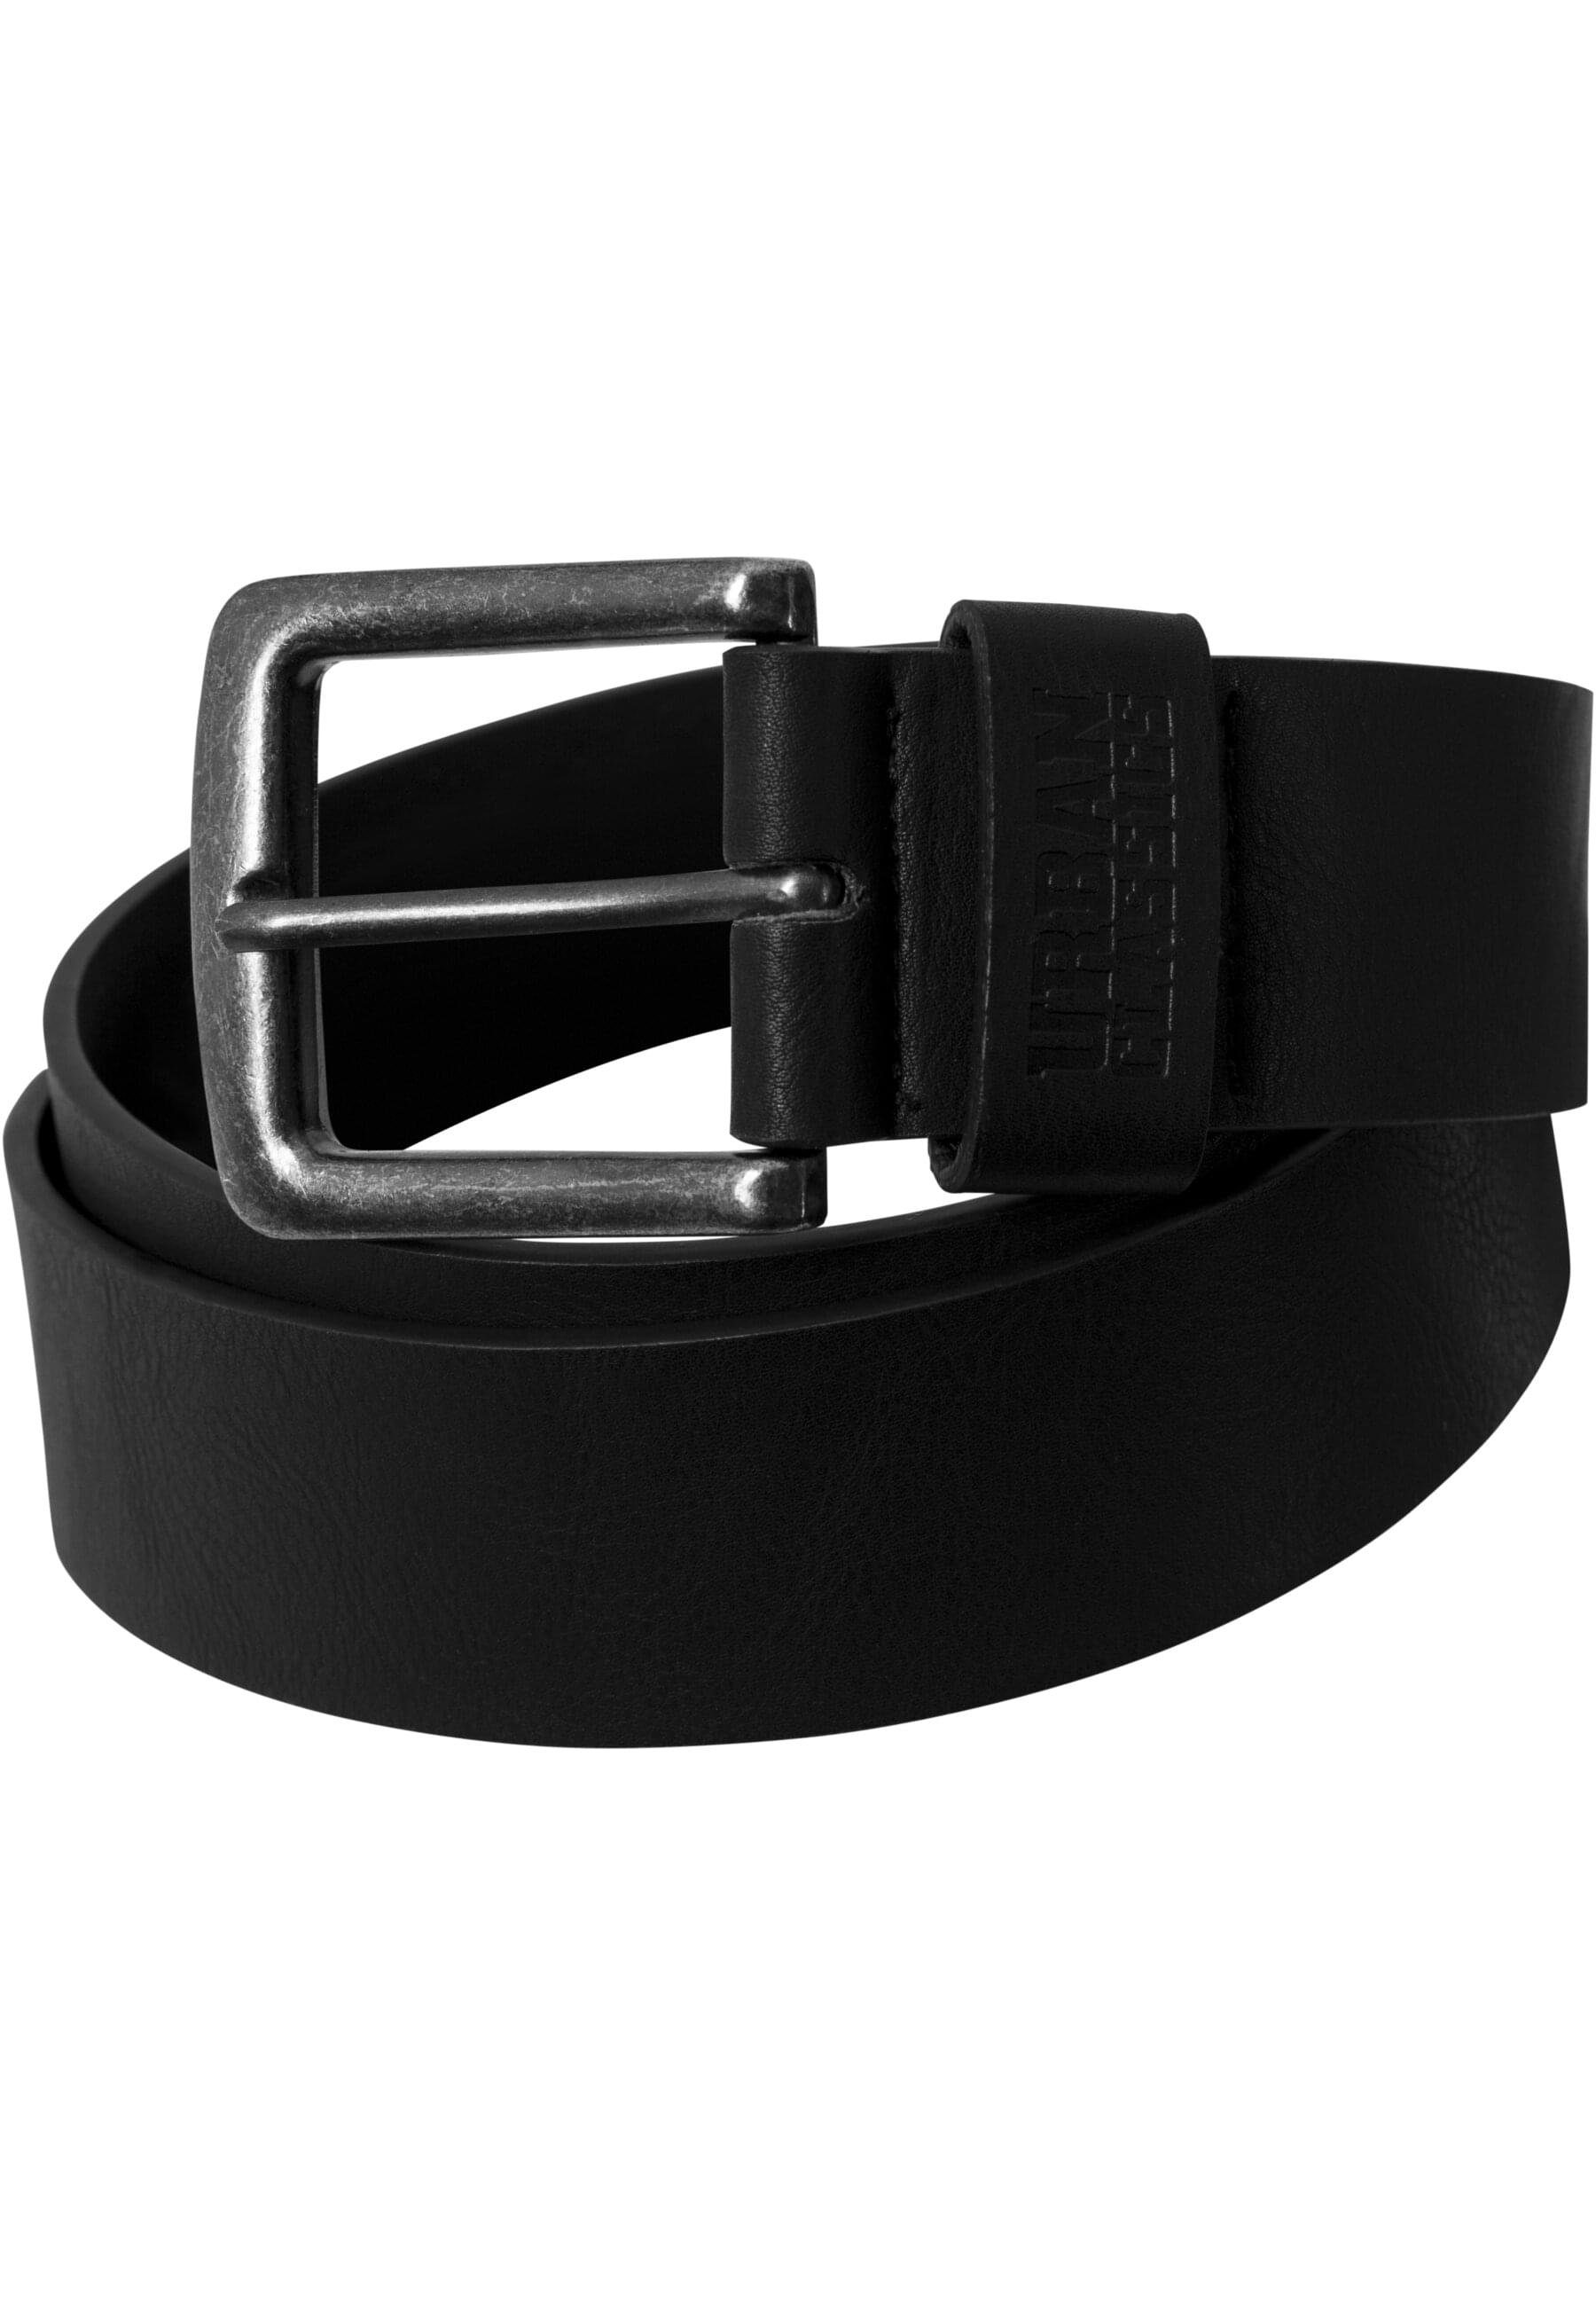 Hüftgürtel Unisex Imitation Leather URBAN schwarz CLASSICS Belt